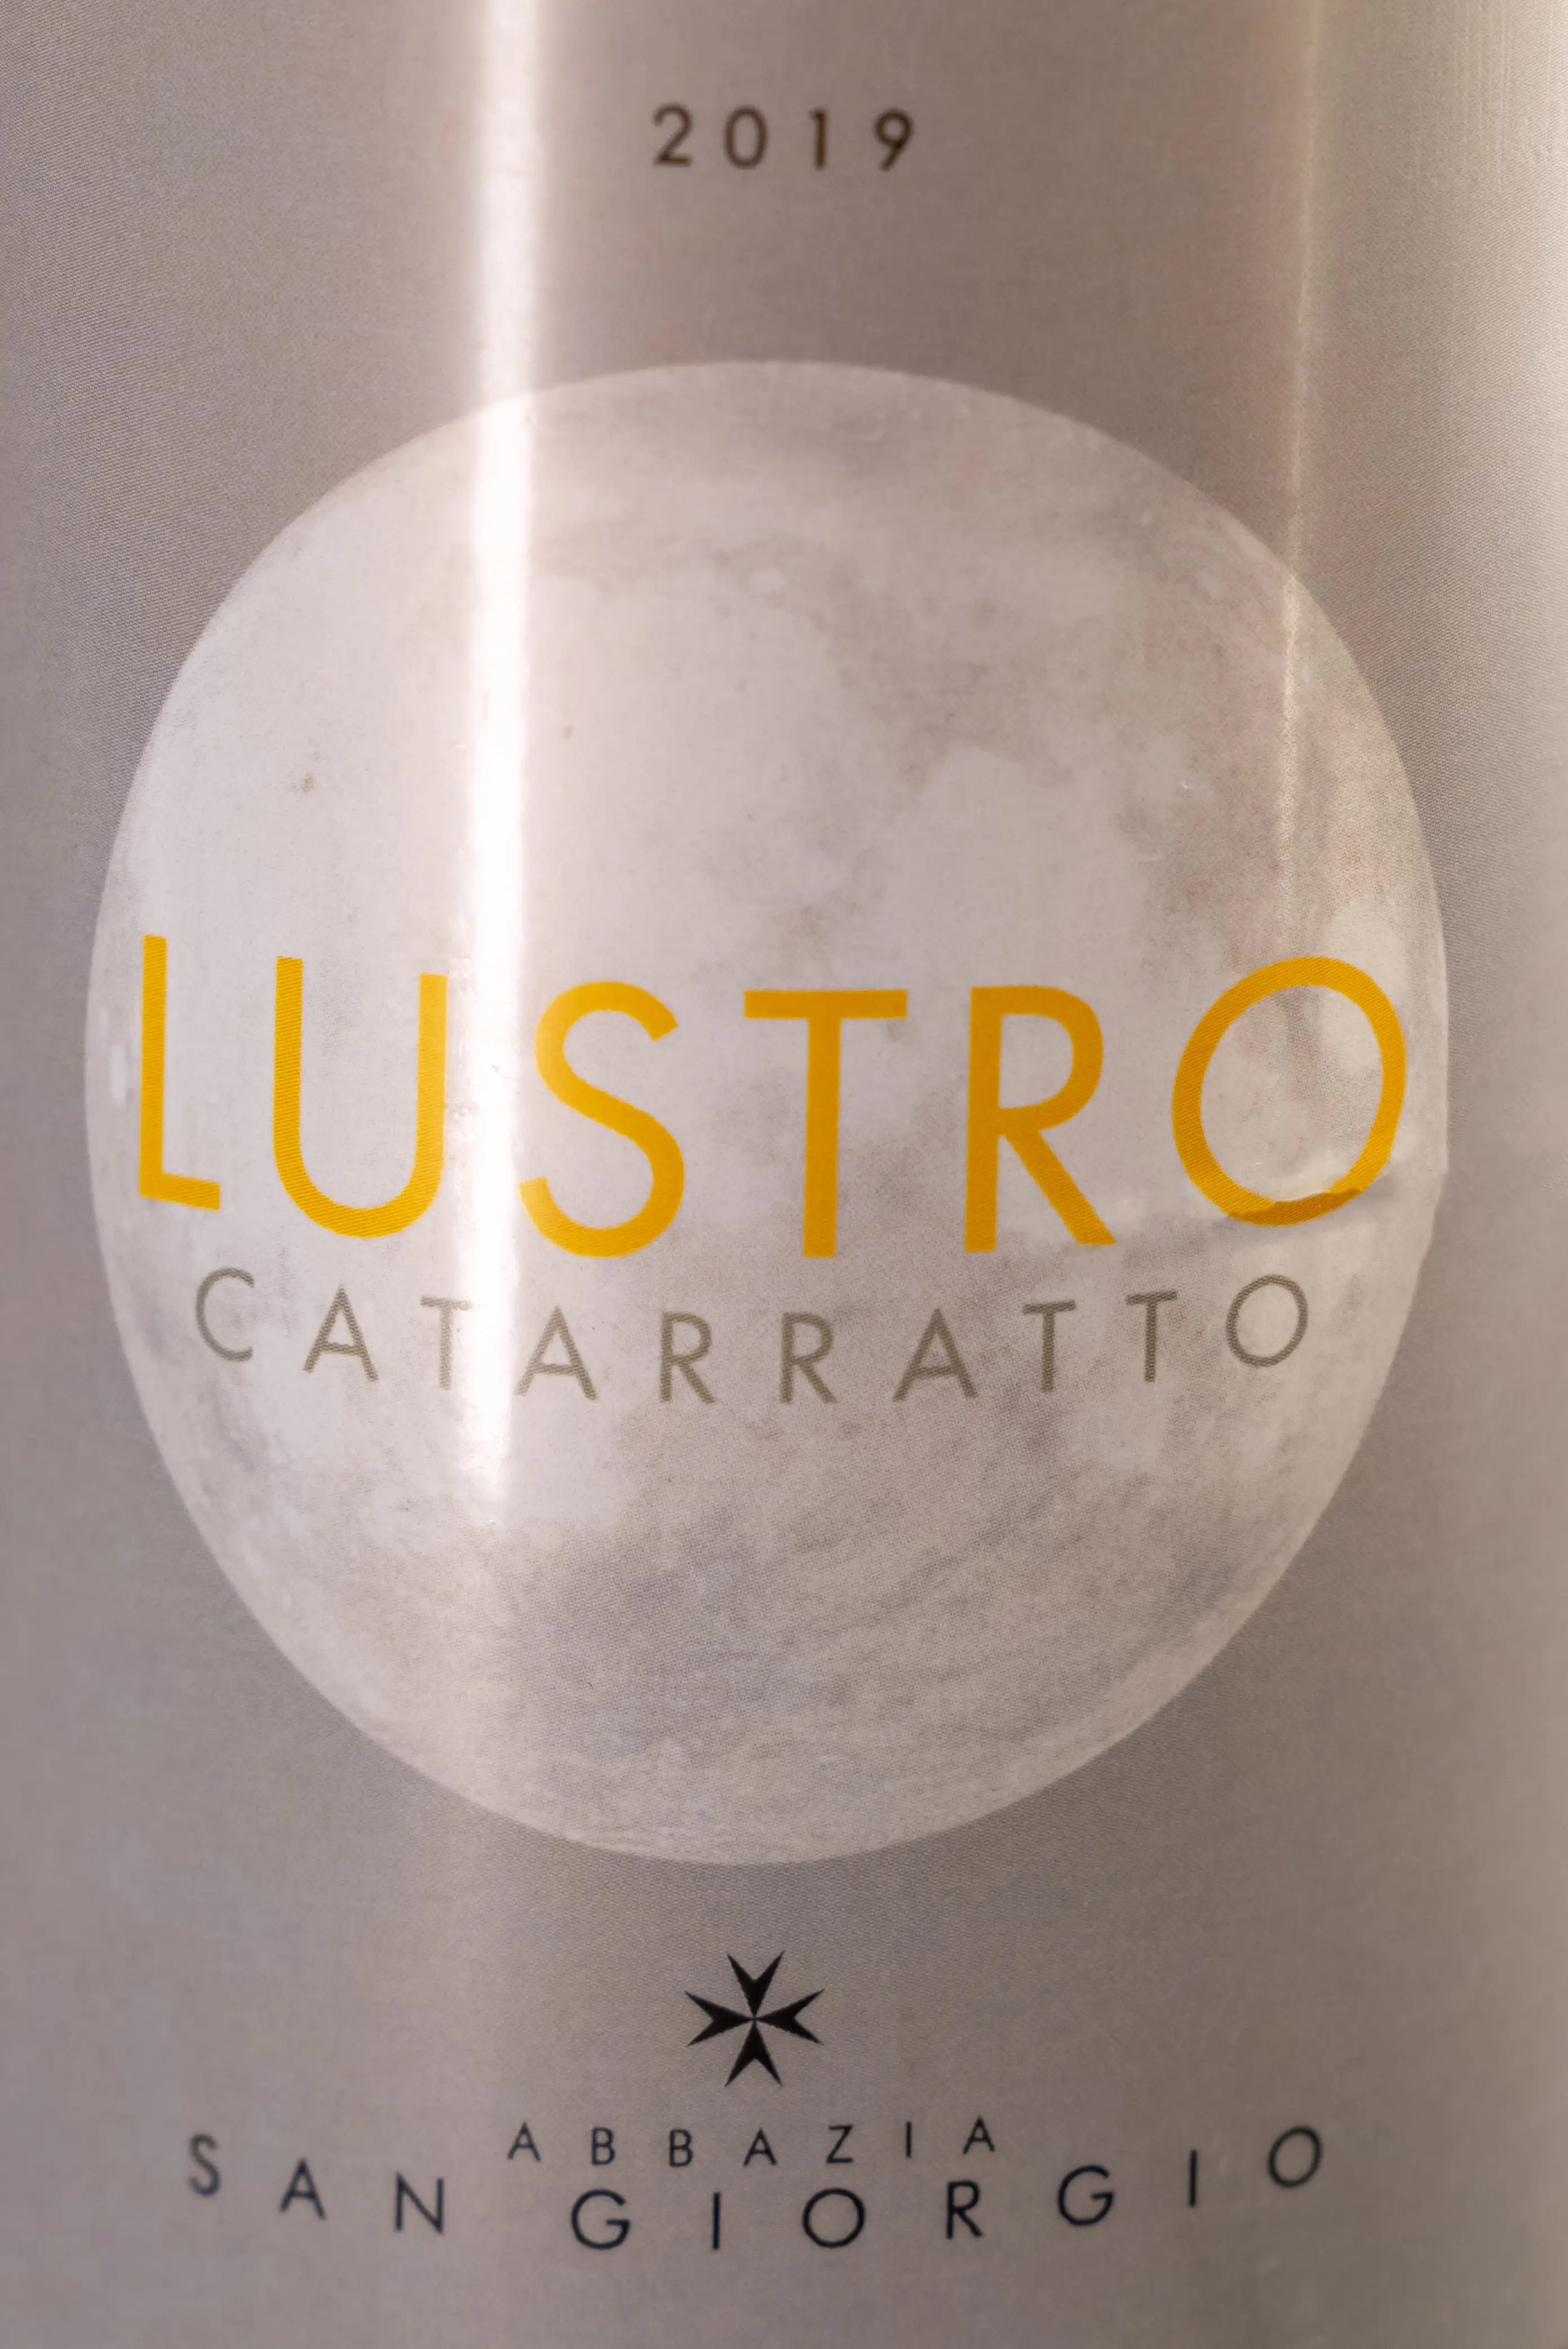 Вино Abbazia San Giorgio Lustro Catarratto Terre Siciliane IGT 2019 / Аббация Сан Джорджио Лустро Катарратто 2019